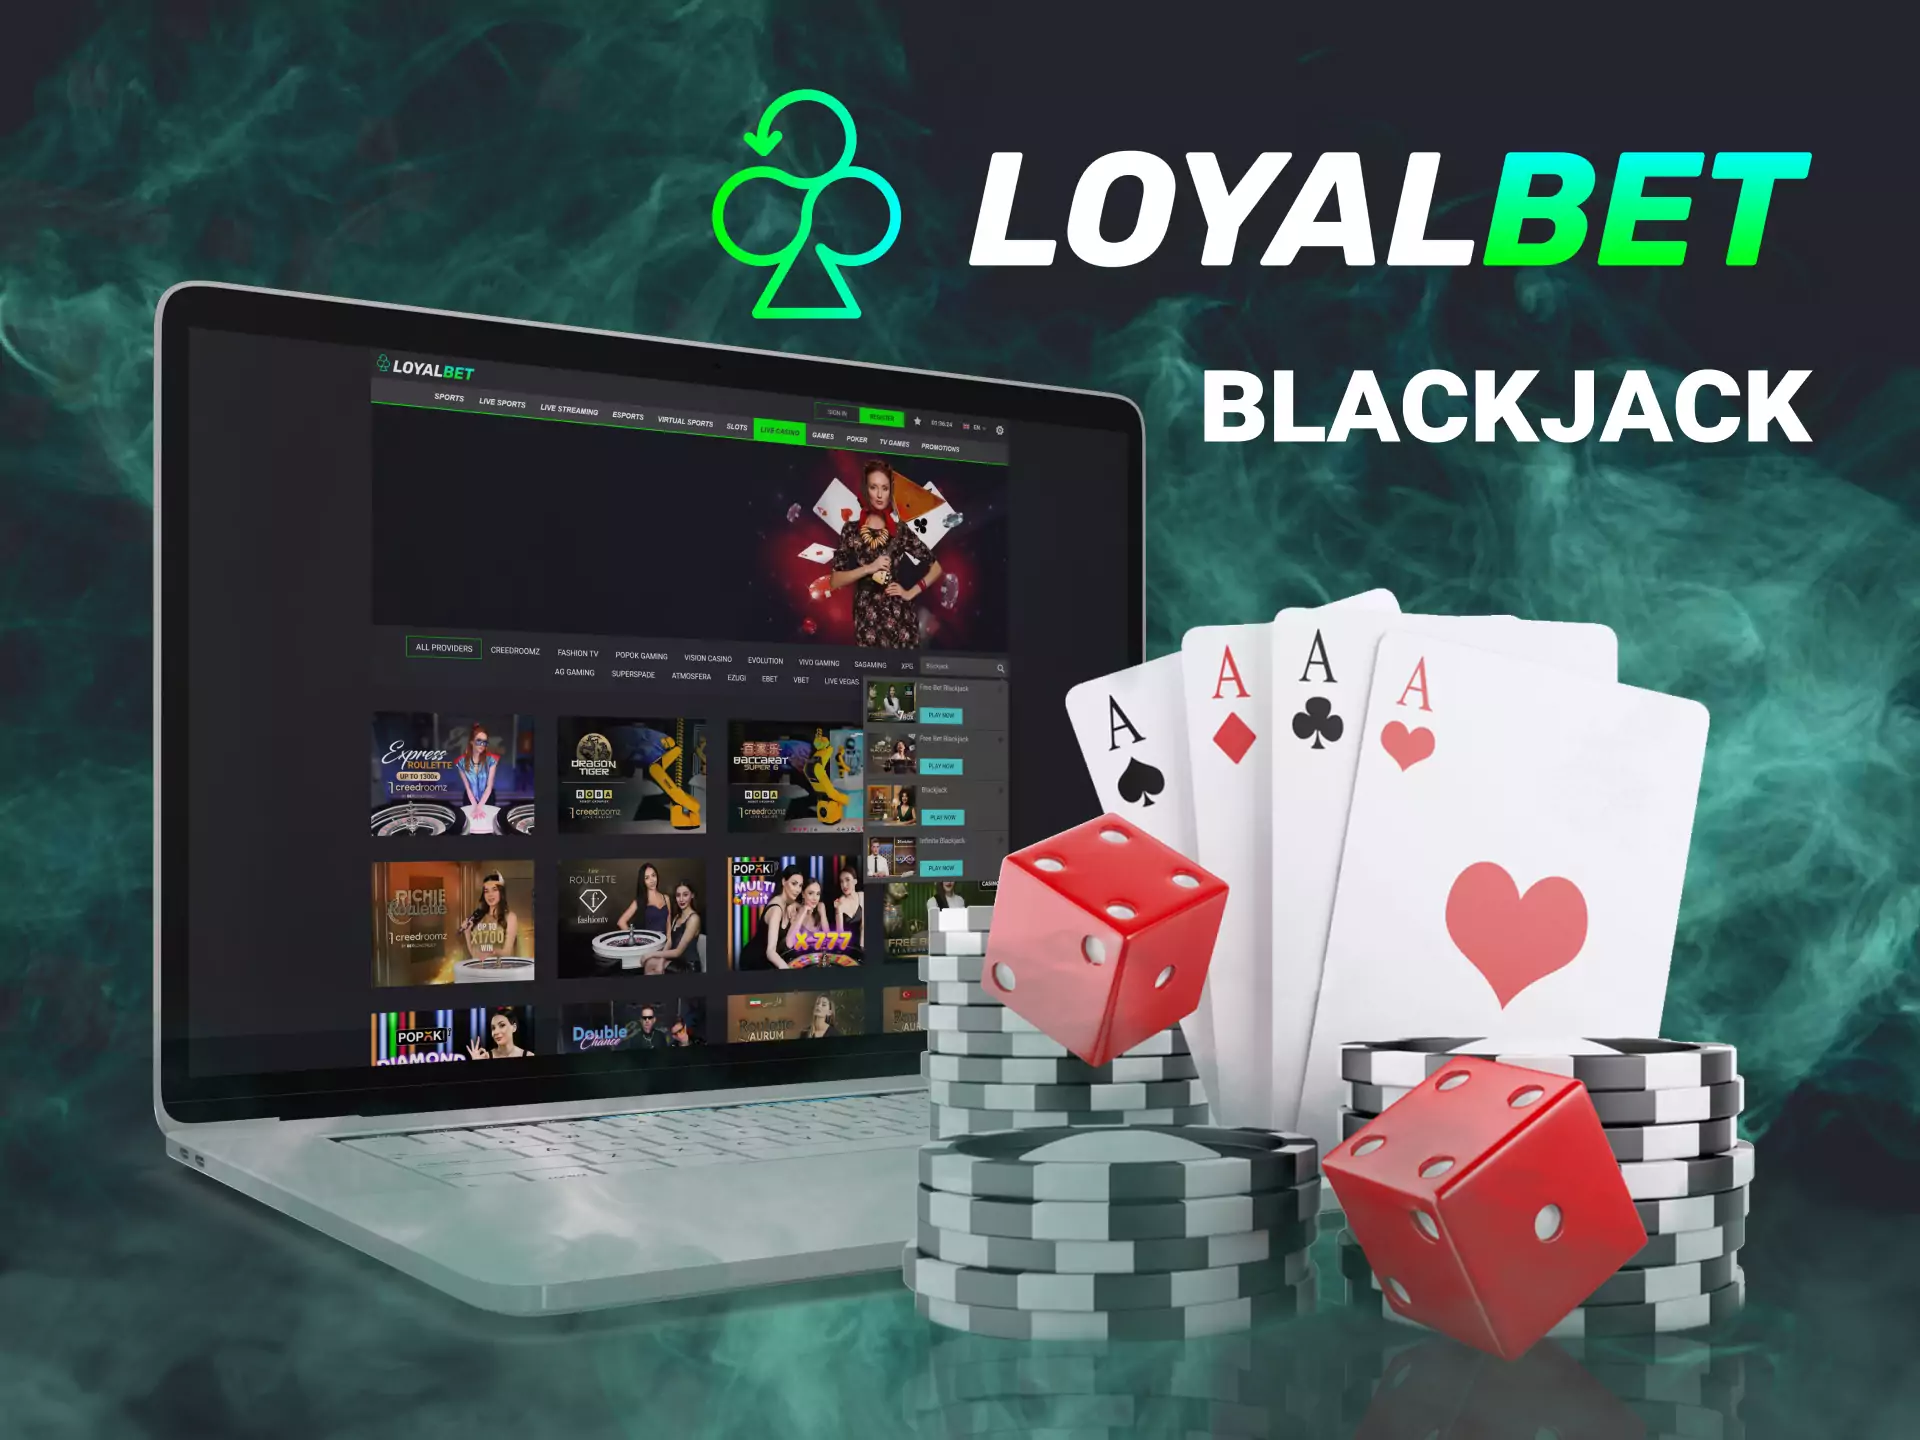 Visit the Loyalbet Online Casino to play blackjack.